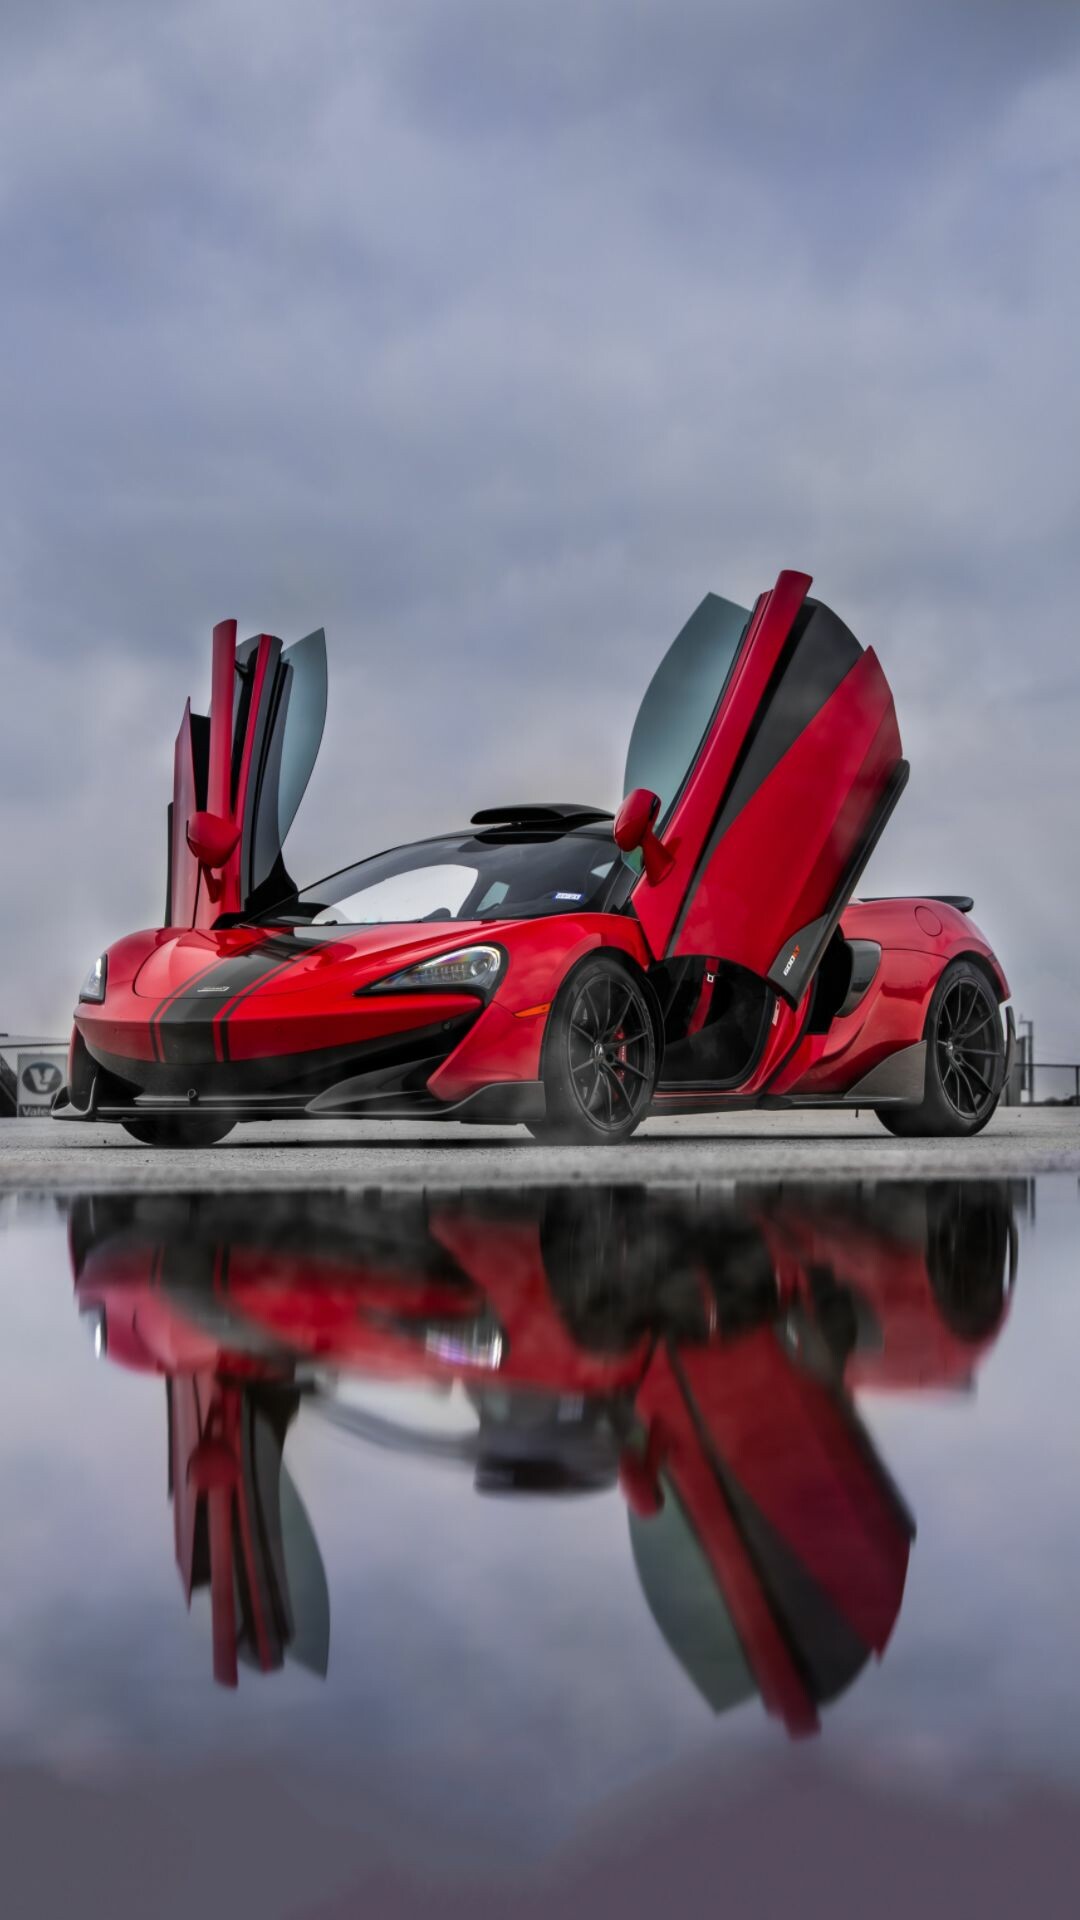 McLaren: British niche automaker, Produced its 15,000th car in 2018. 1080x1920 Full HD Wallpaper.